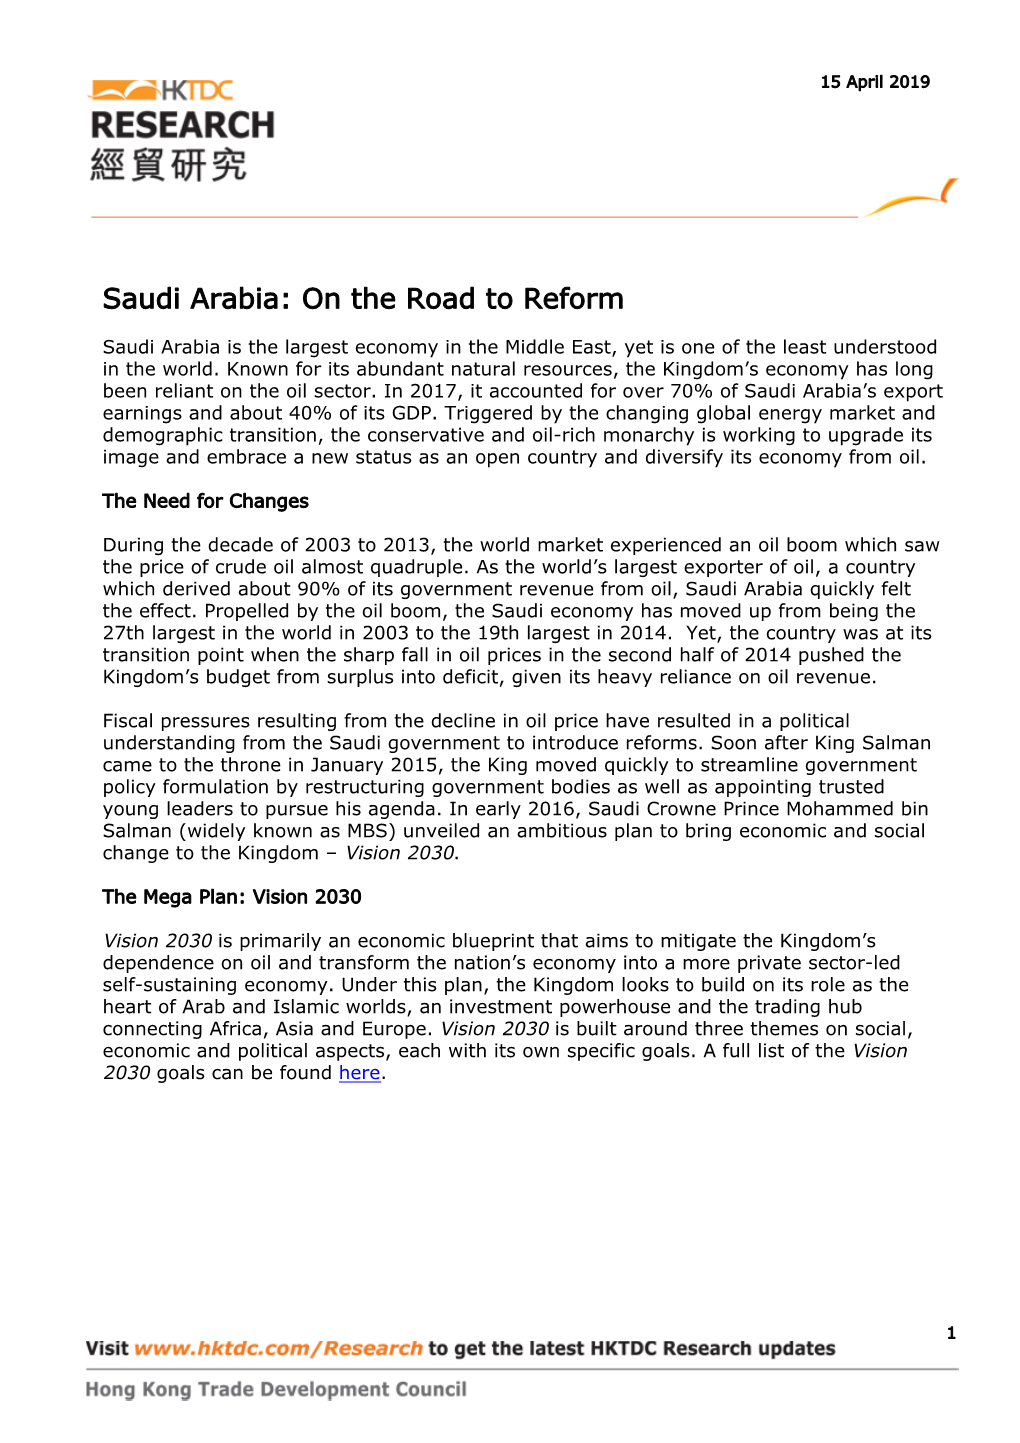 Saudi Arabia: on the Road to Reform